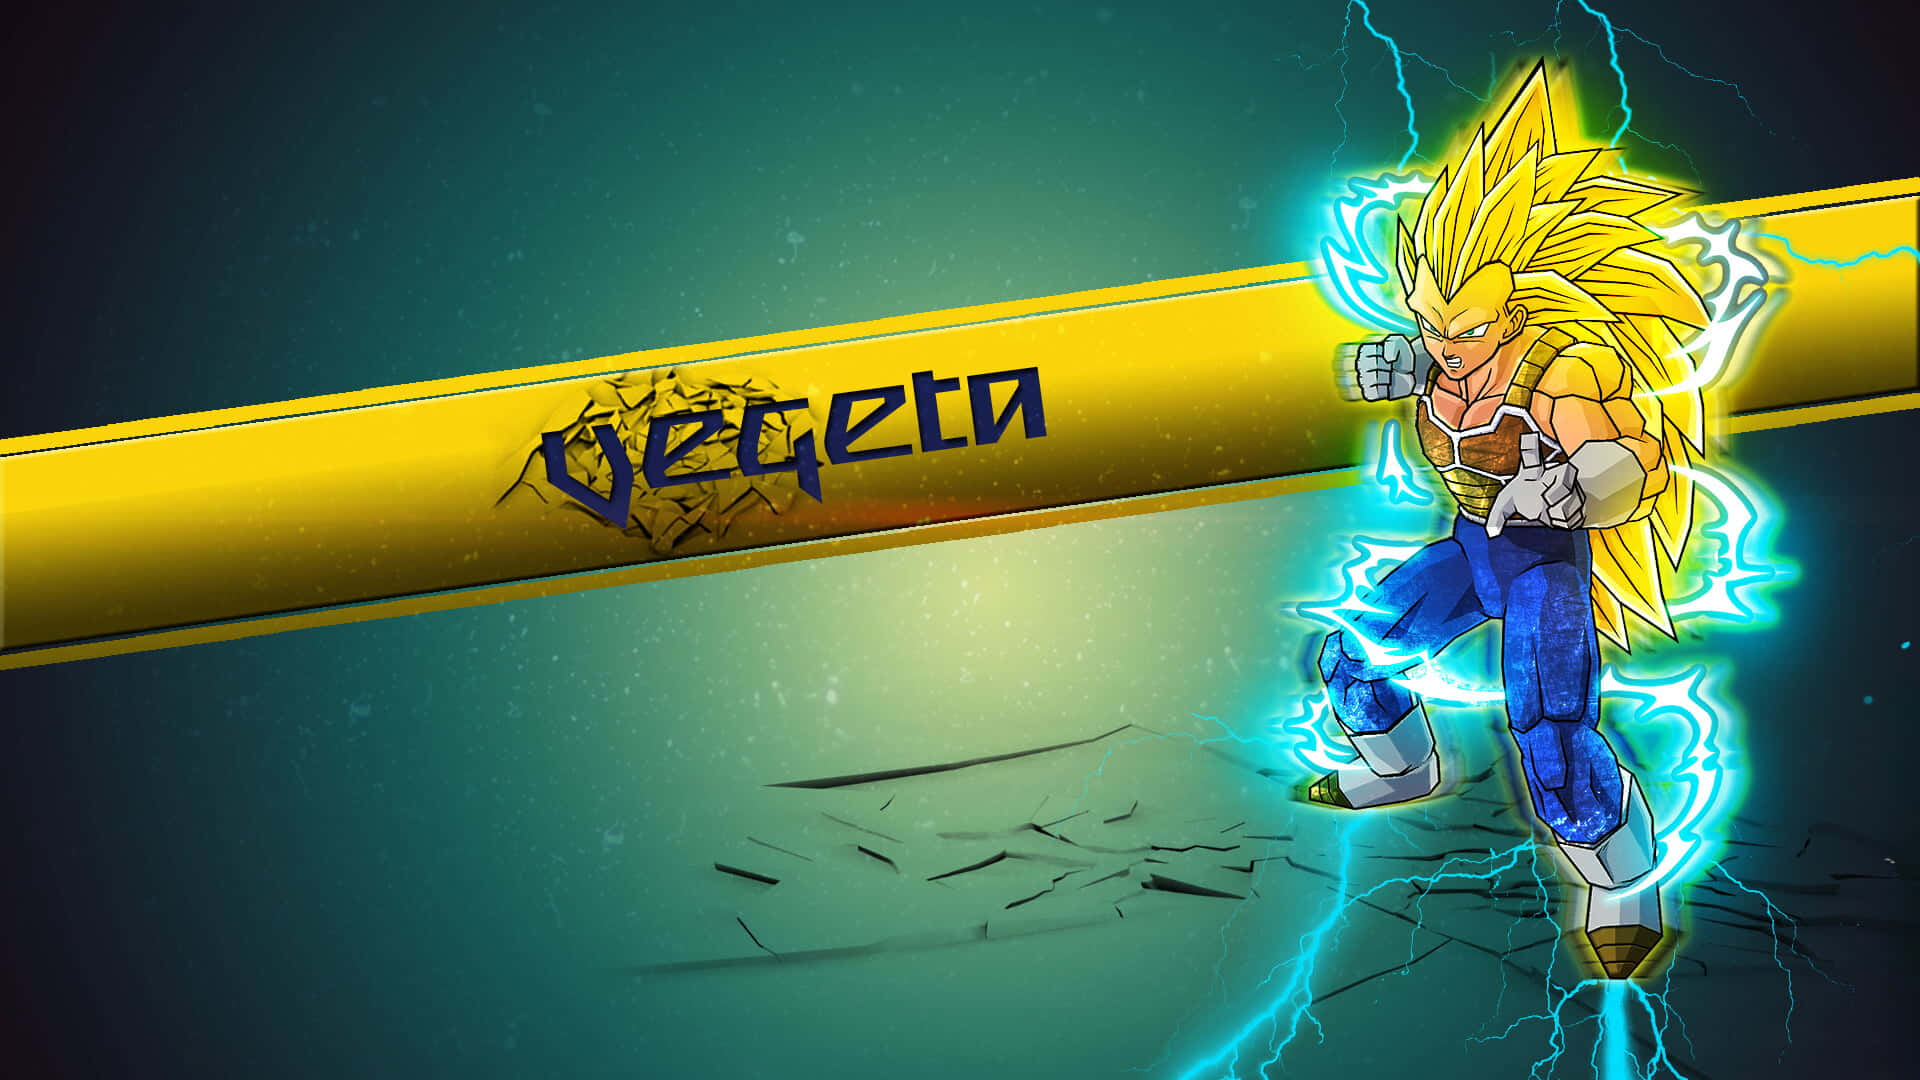 Legendary Vegeta Super Saiyan 3 in action Wallpaper